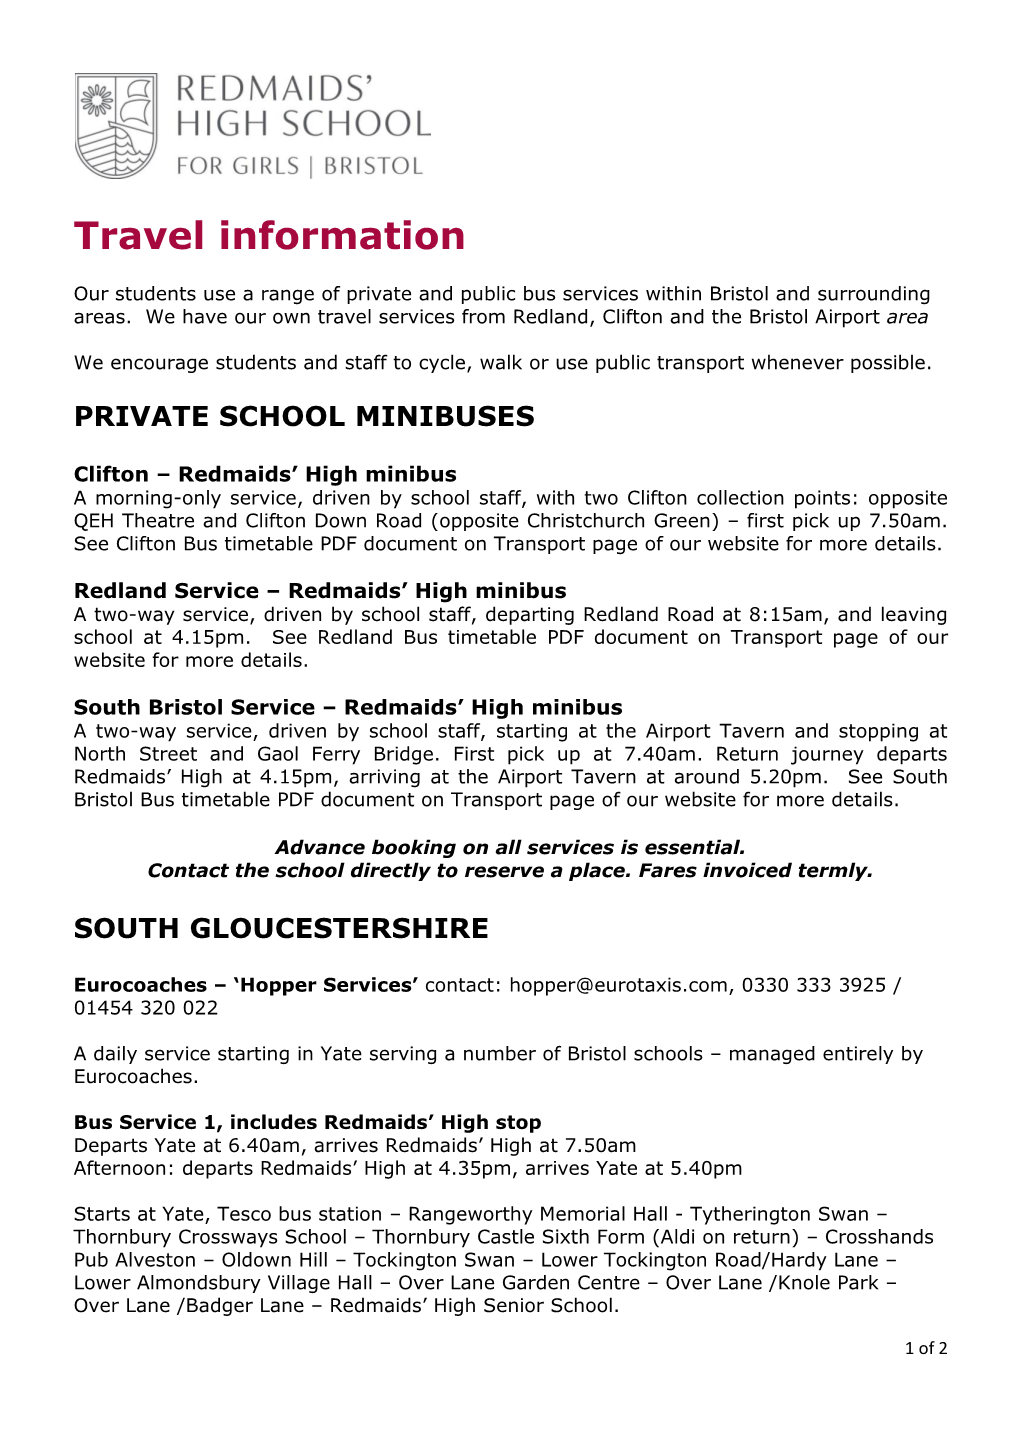 Redmaids' High Travel Information